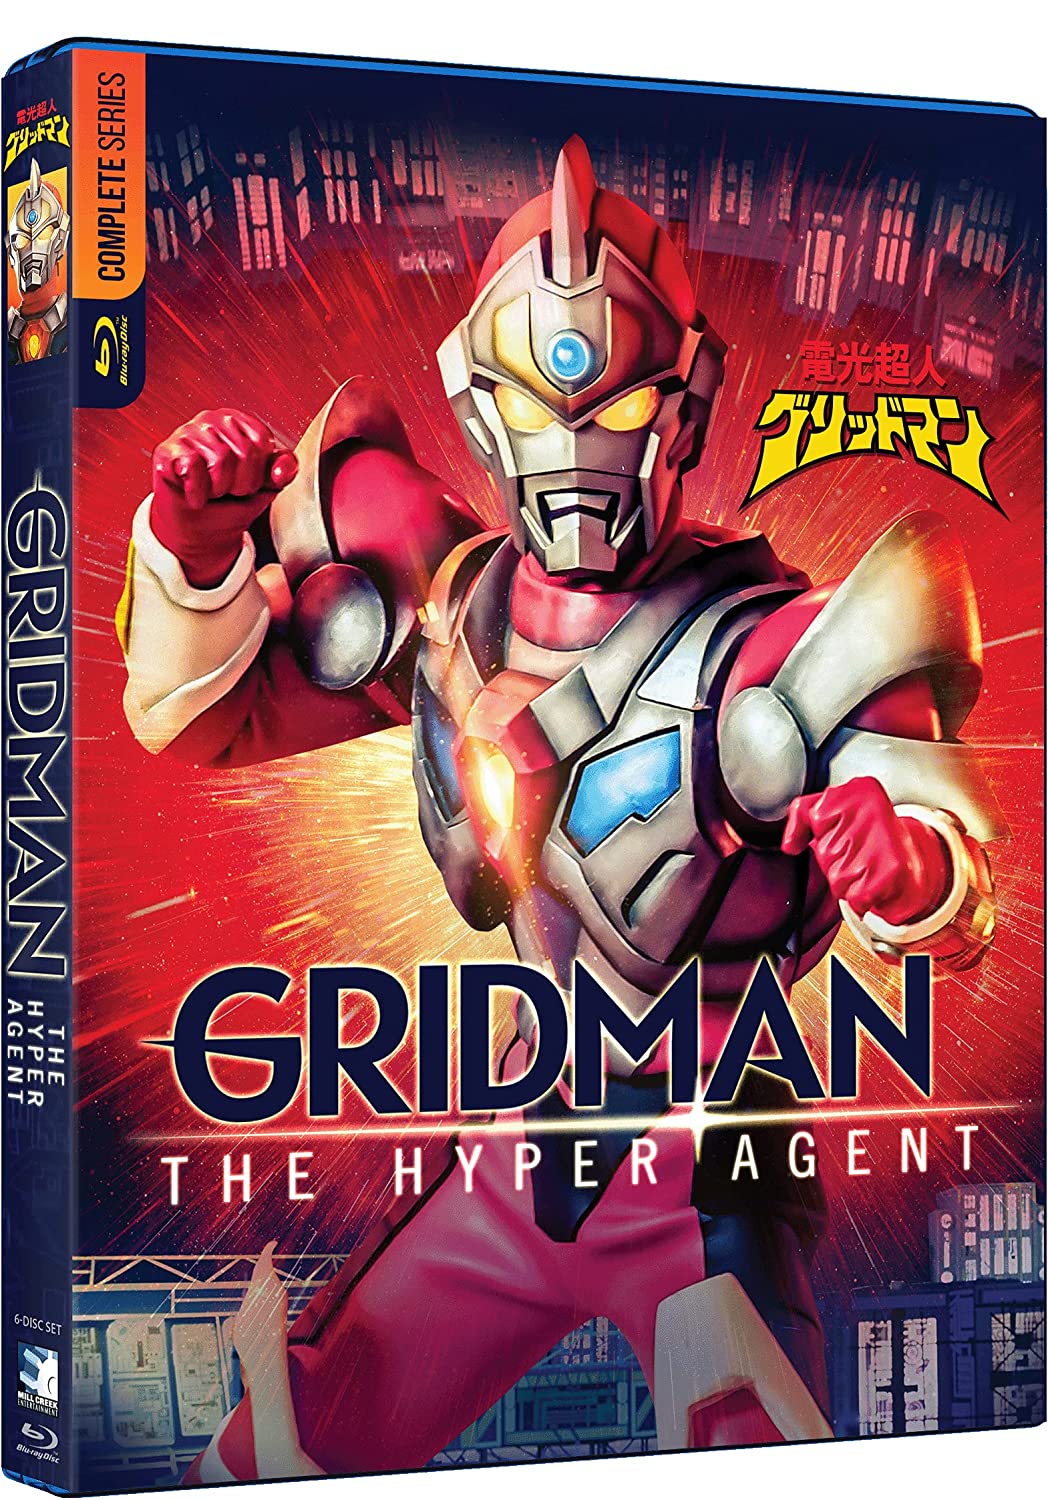 Mô Hình Hyper Agent Gridman SCLA SSSS Đồ Chơi Lắp Ráp Anime | Lazada.vn